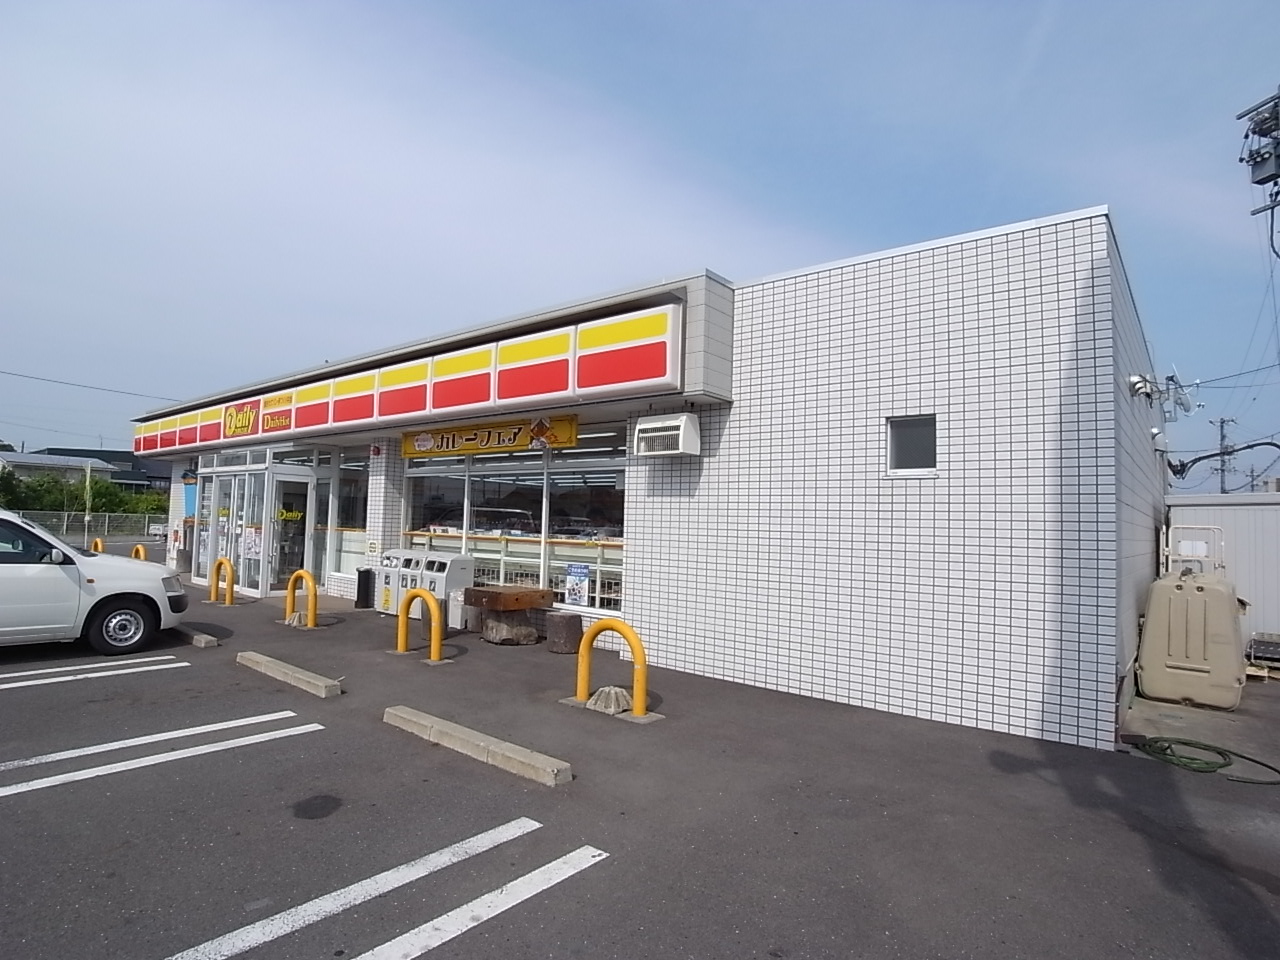 Convenience store. Daily Yamazaki Gifu Hashima Inter store up (convenience store) 503m